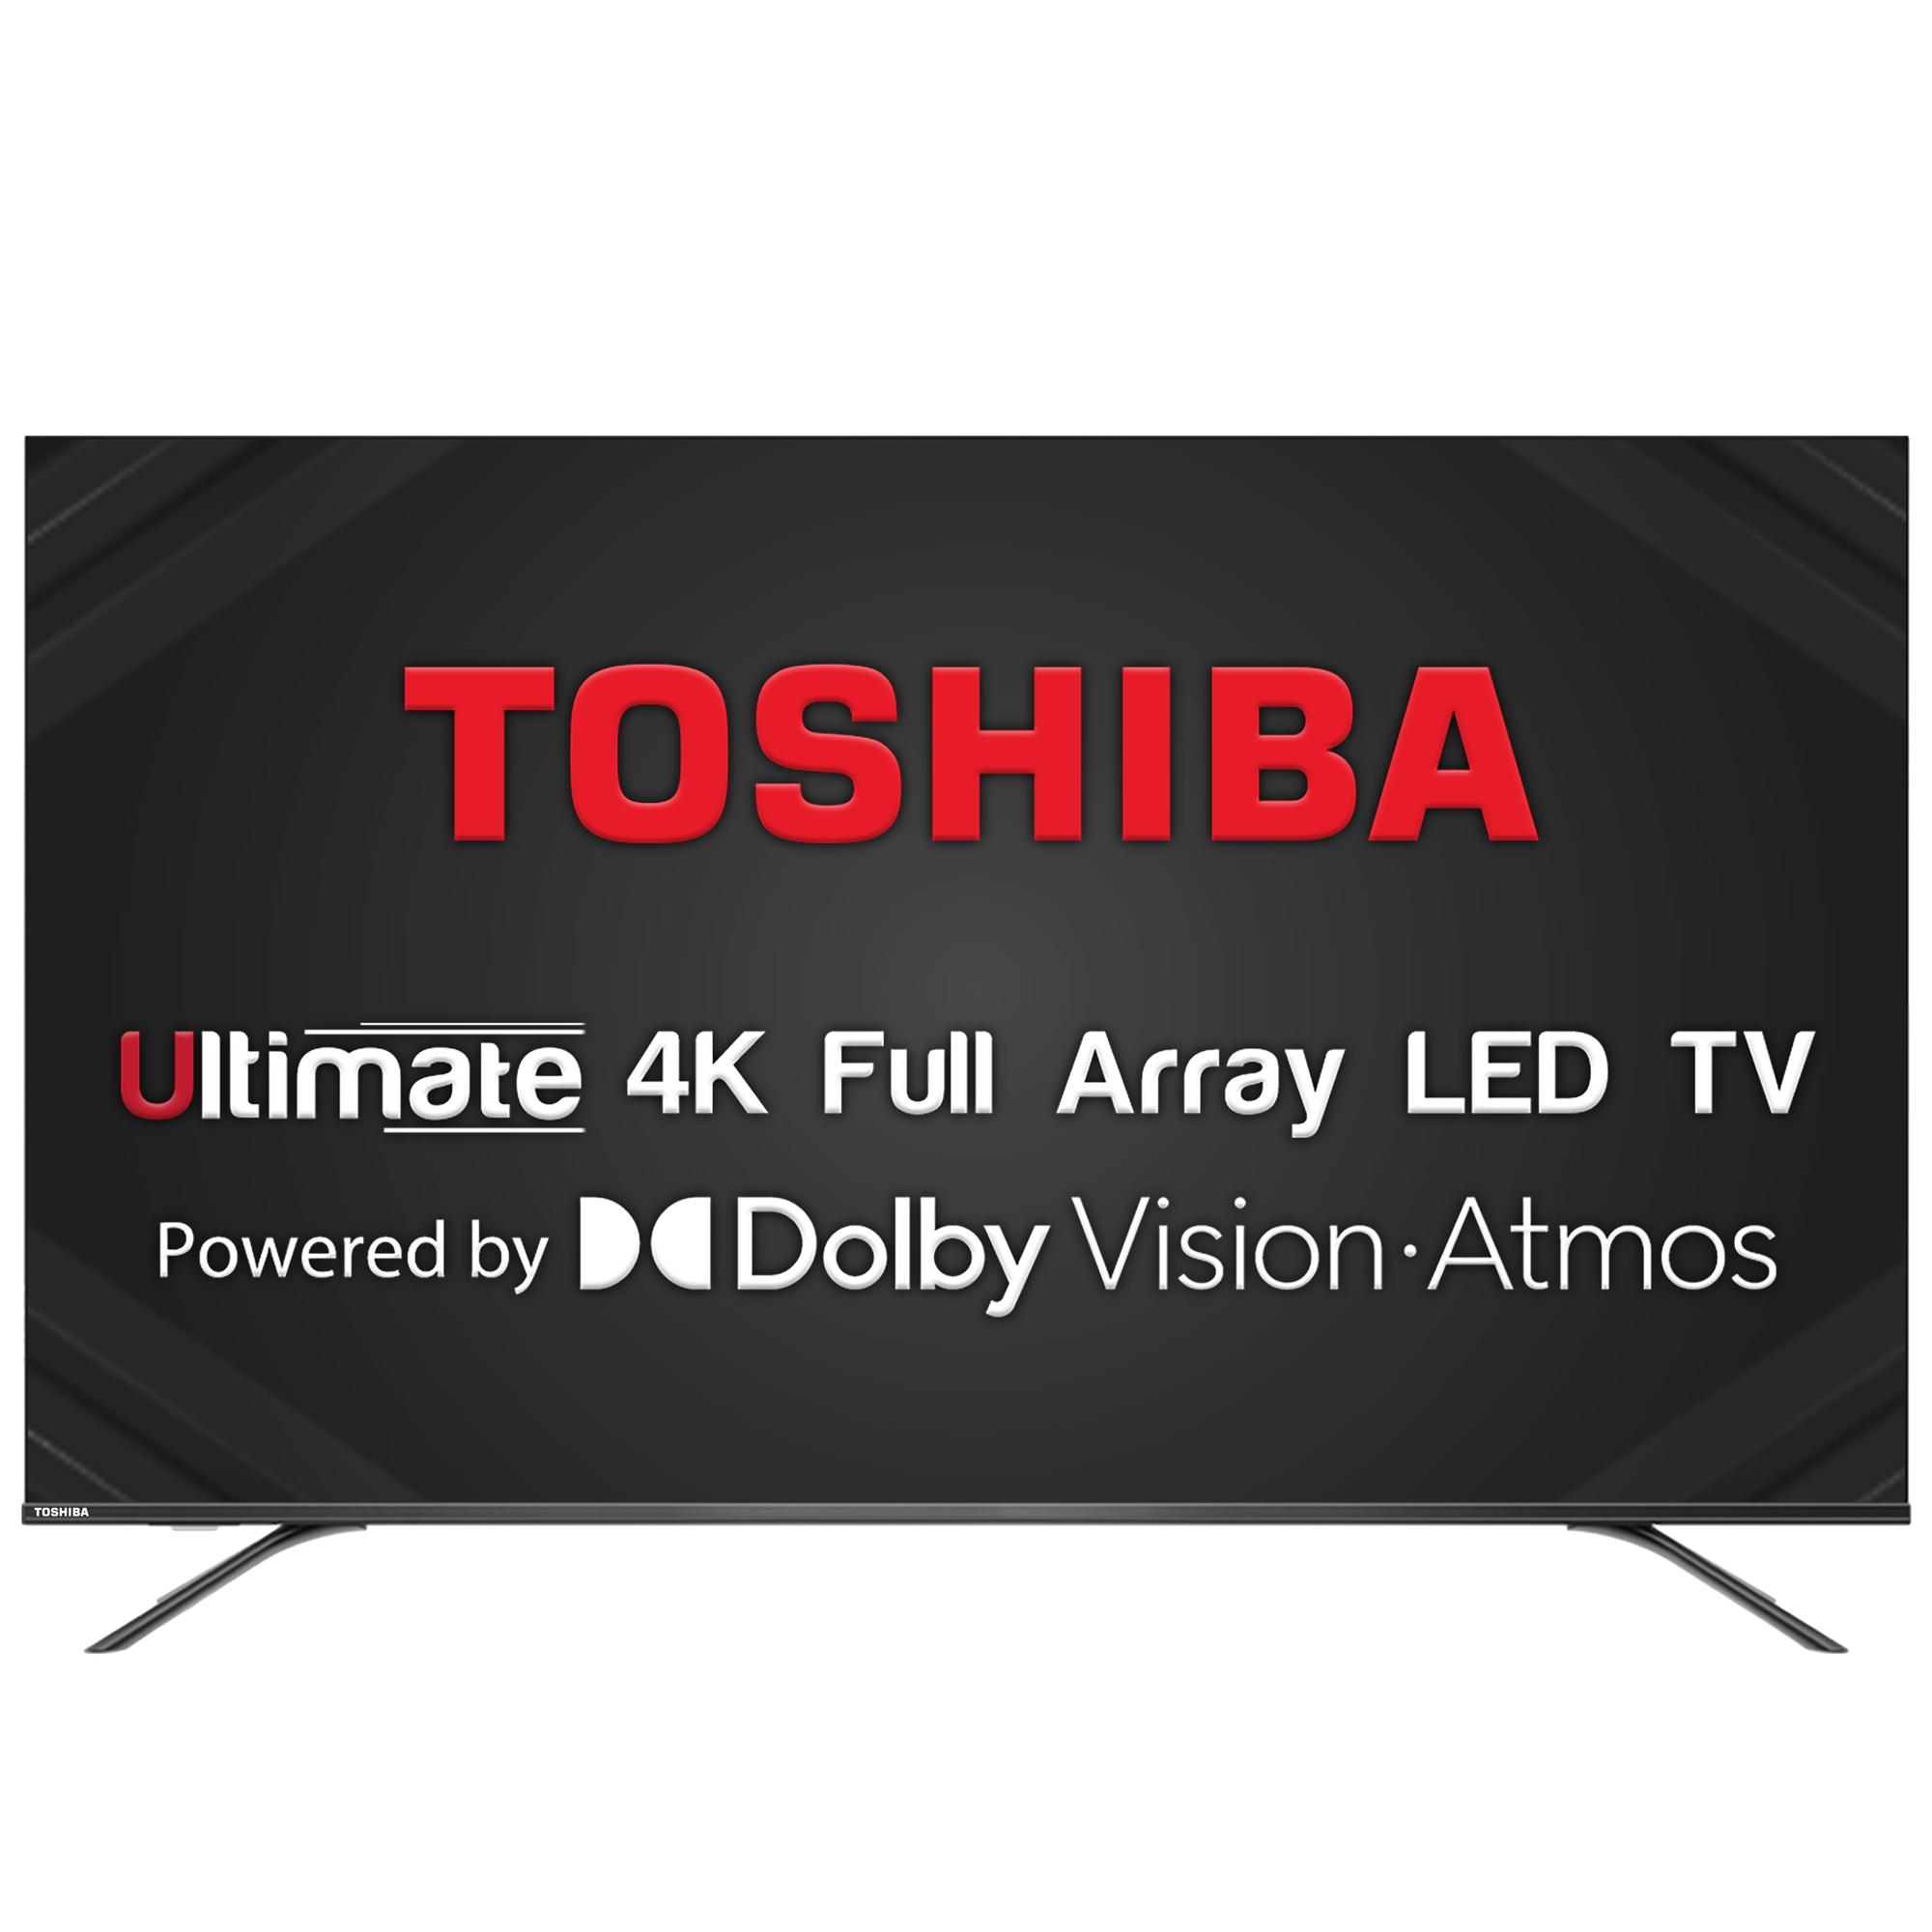 Toshiba U7980 Series 139cm (55 Inch) Ultra HD 4K LED Smart TV (3 Years Warranty, Screen Mirroring, 55U7980, Black)_1